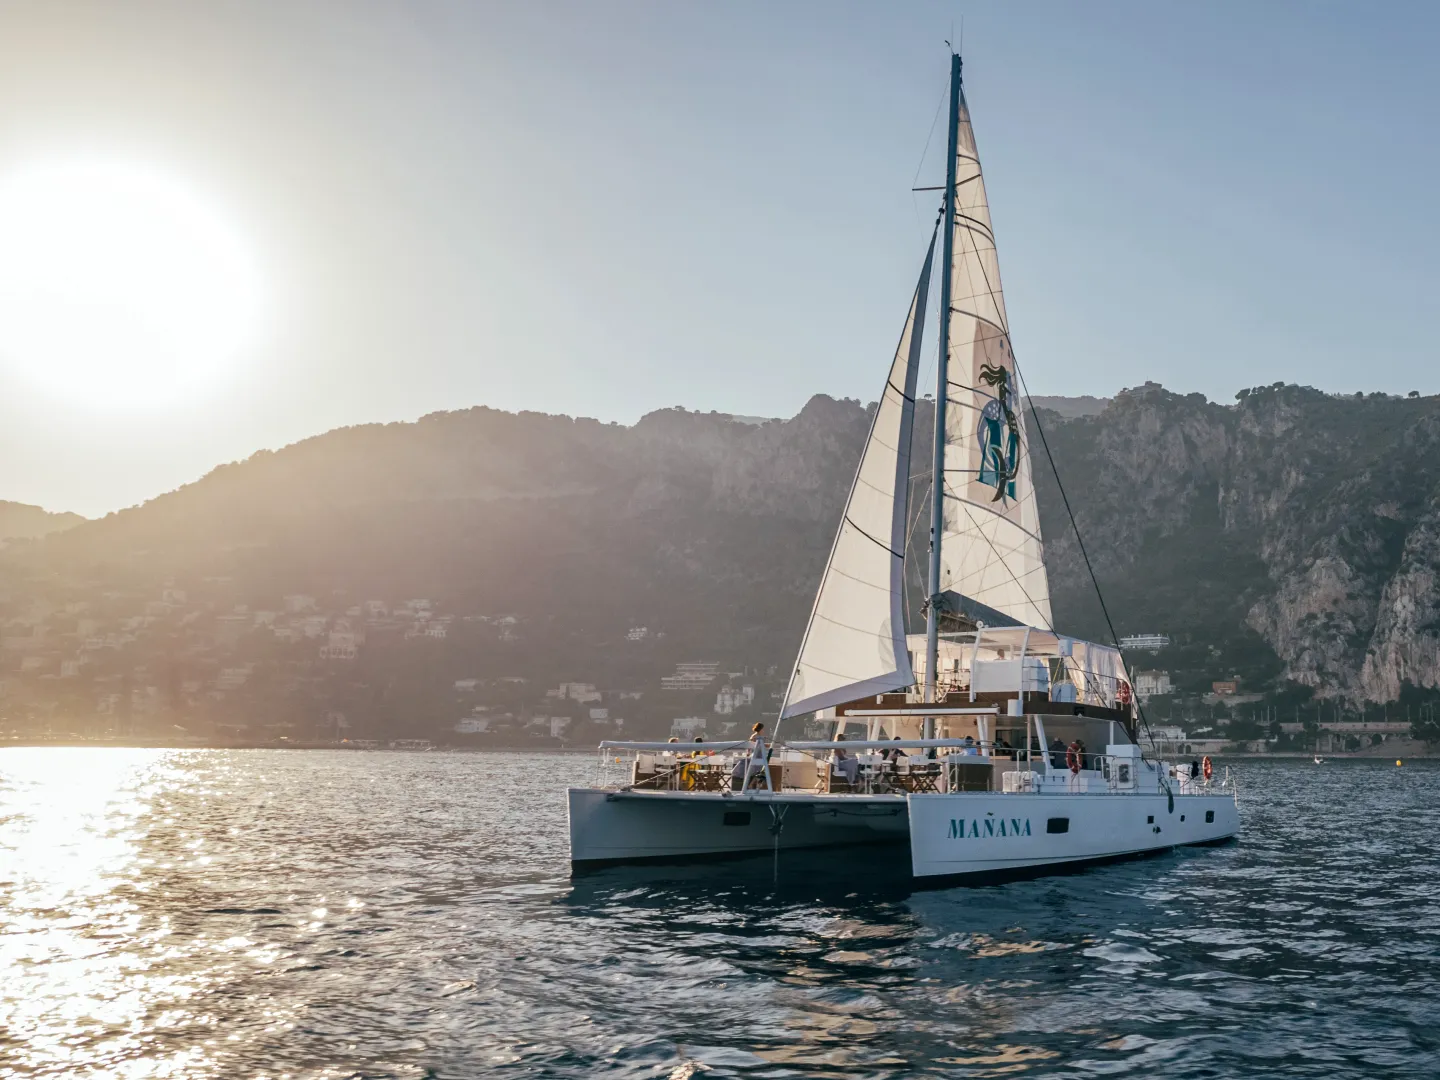 Luxury catamaran yacht Mañana with sails set illuminated by the sun in the harbor of Cannes.